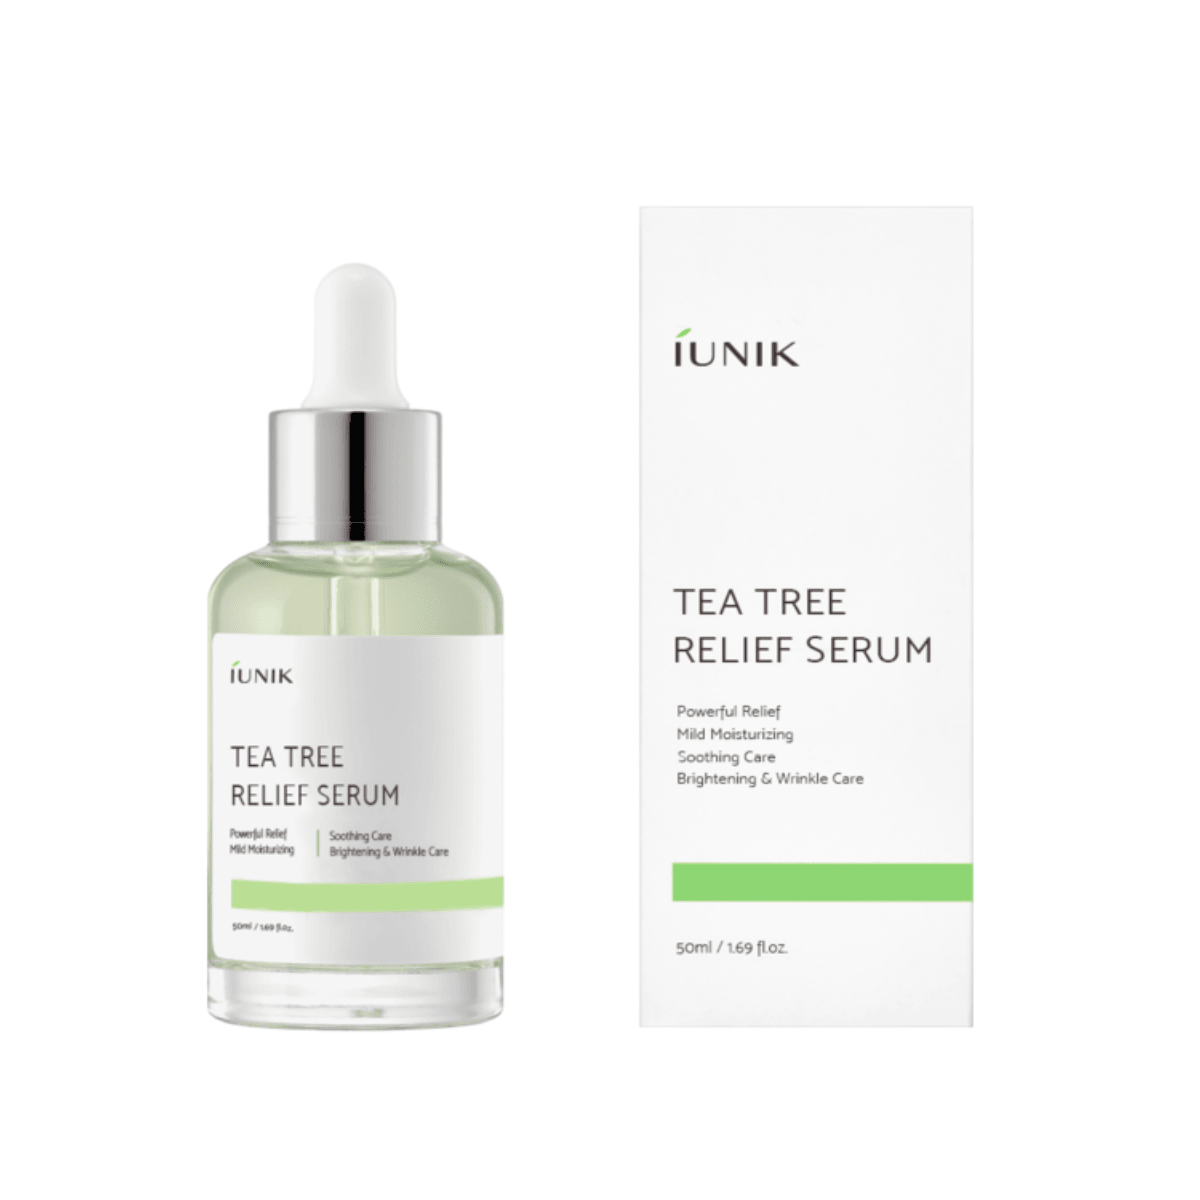 Tea Tree Relief Serum - 50ml